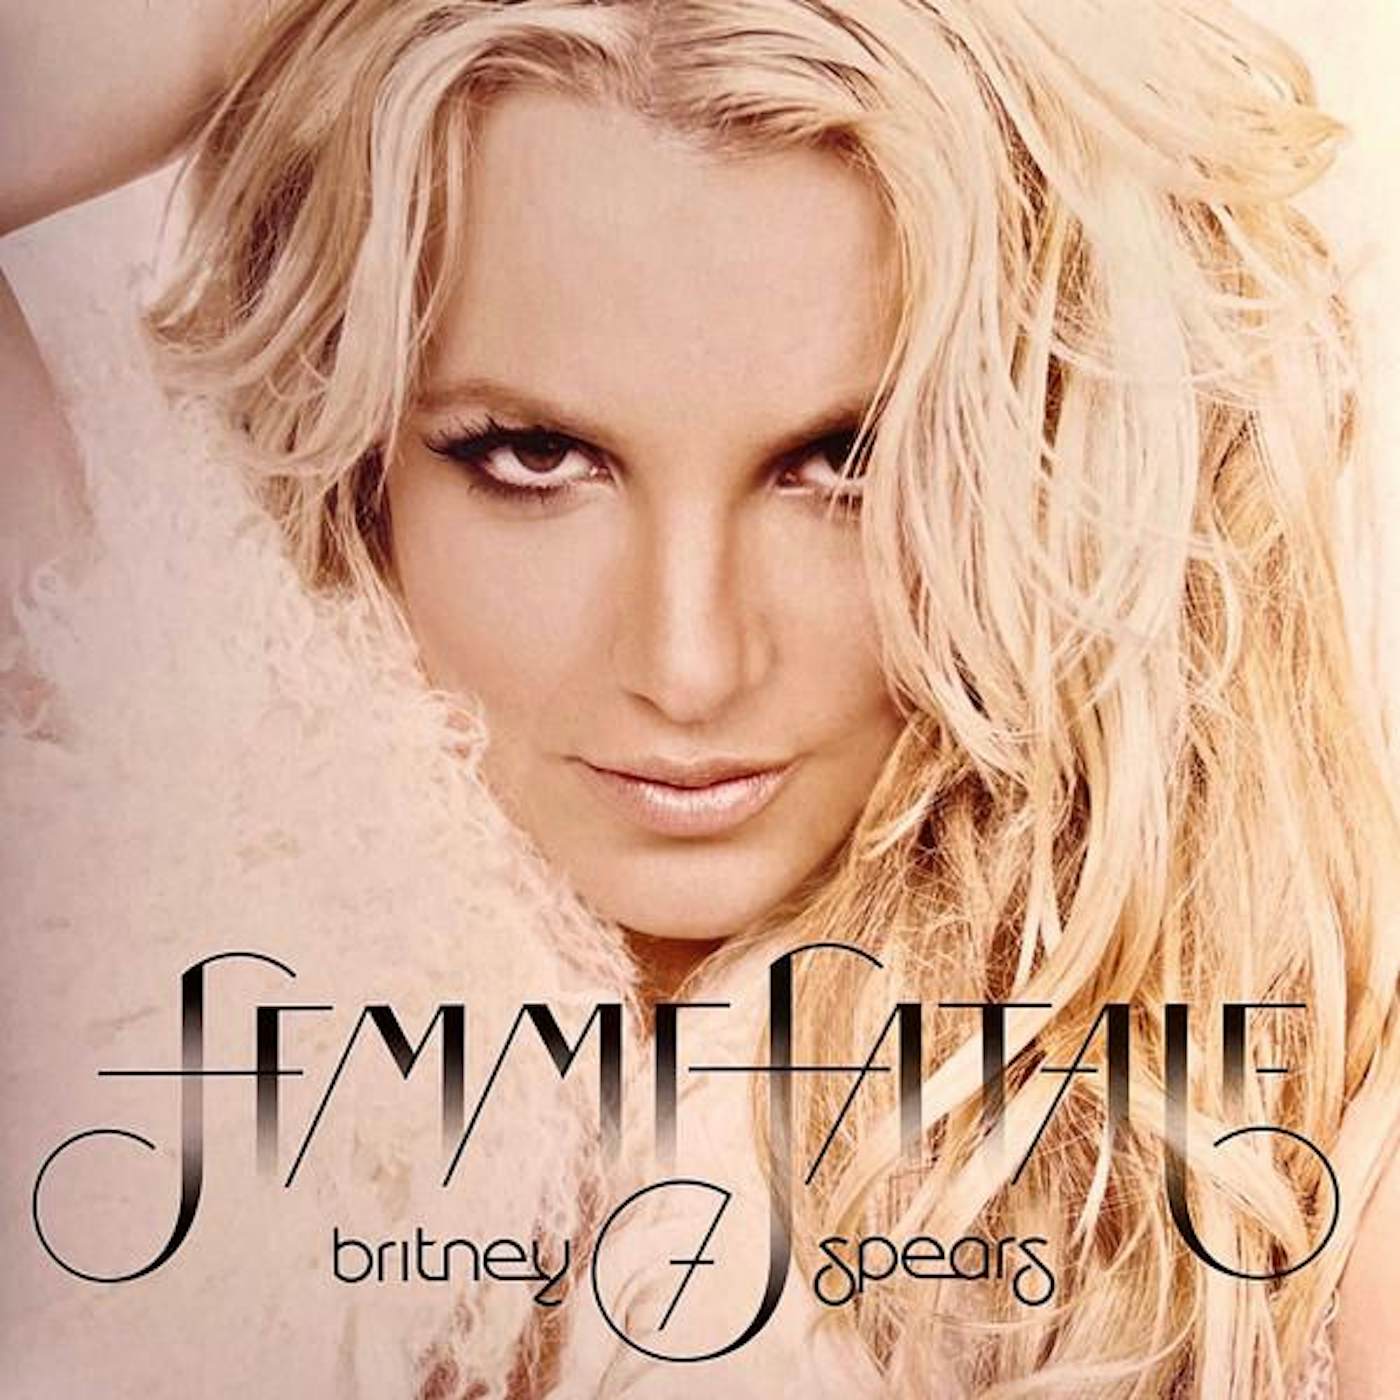 Britney Spears FEMME FATALE - GREY MARBLE VINYL Vinyl Record